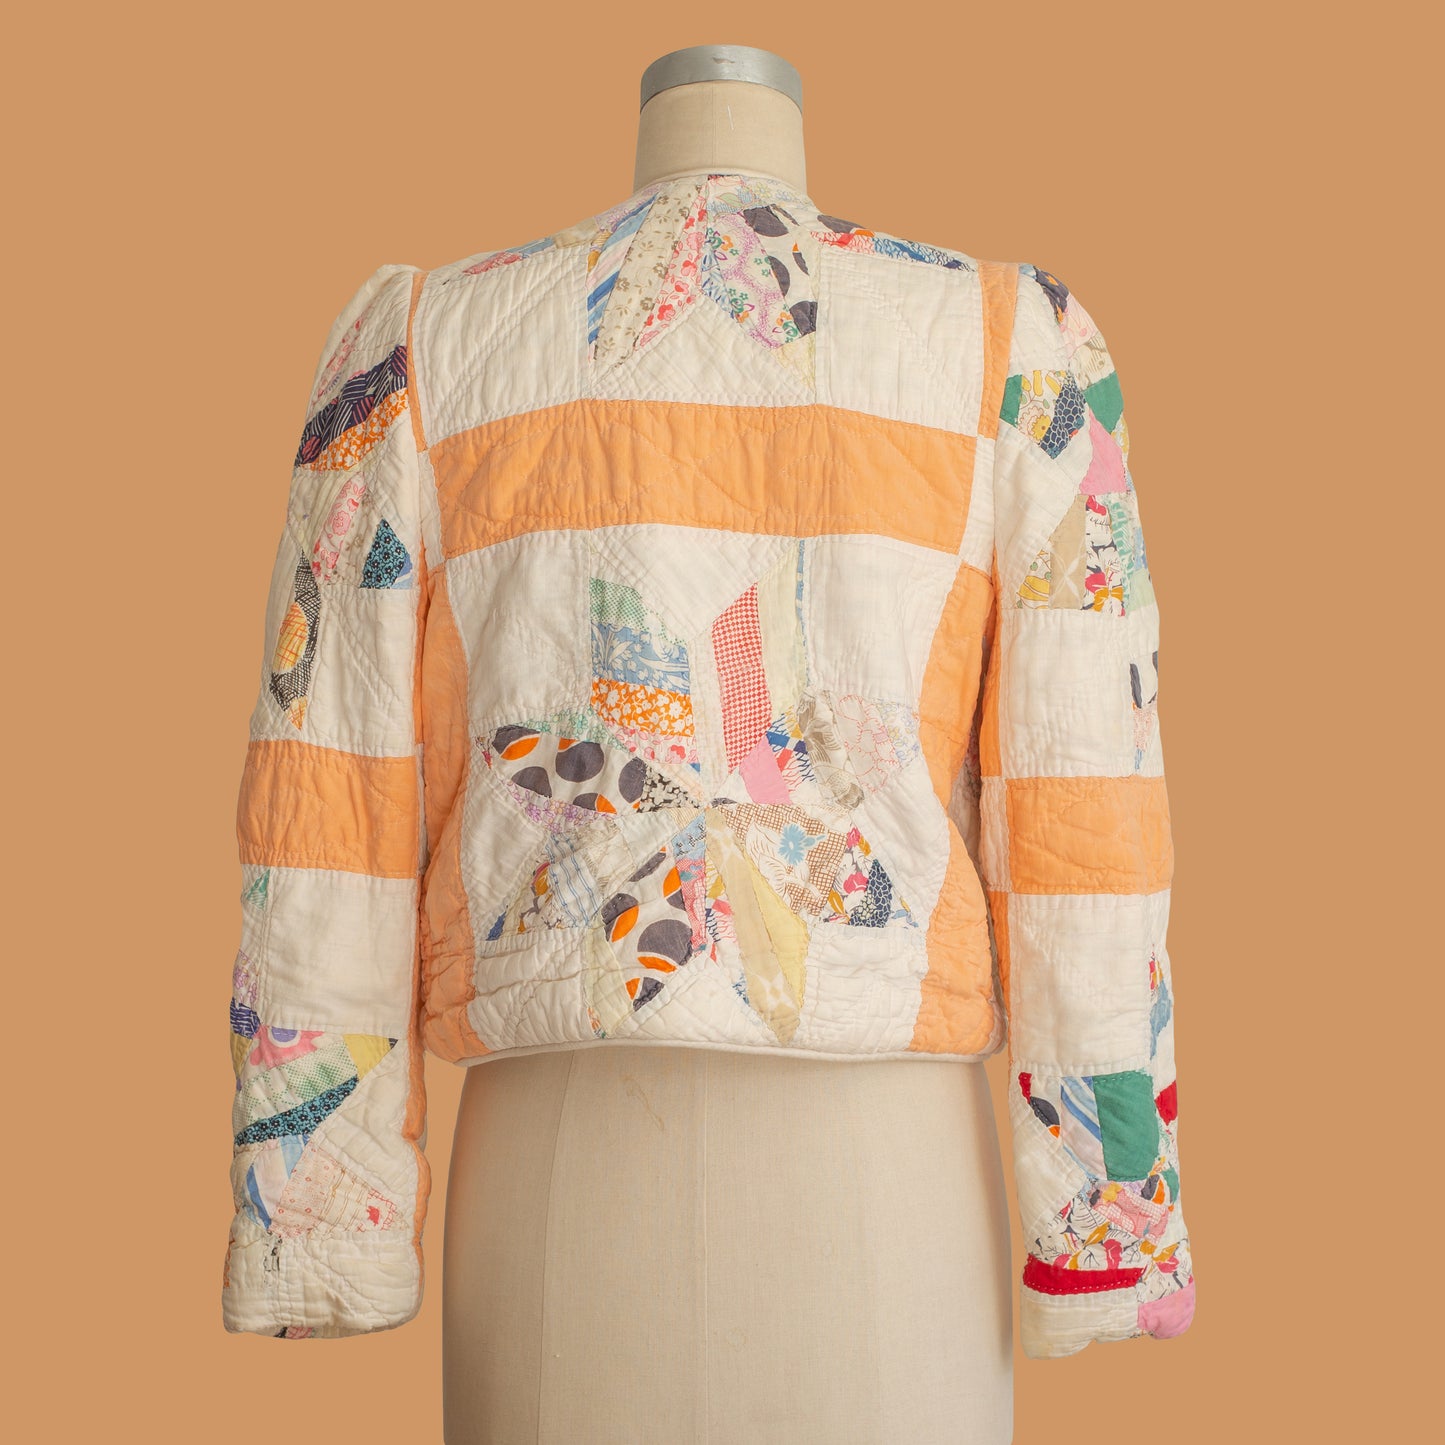 Vintage 1970s Quilt Jacket - 40s Quilt + Style